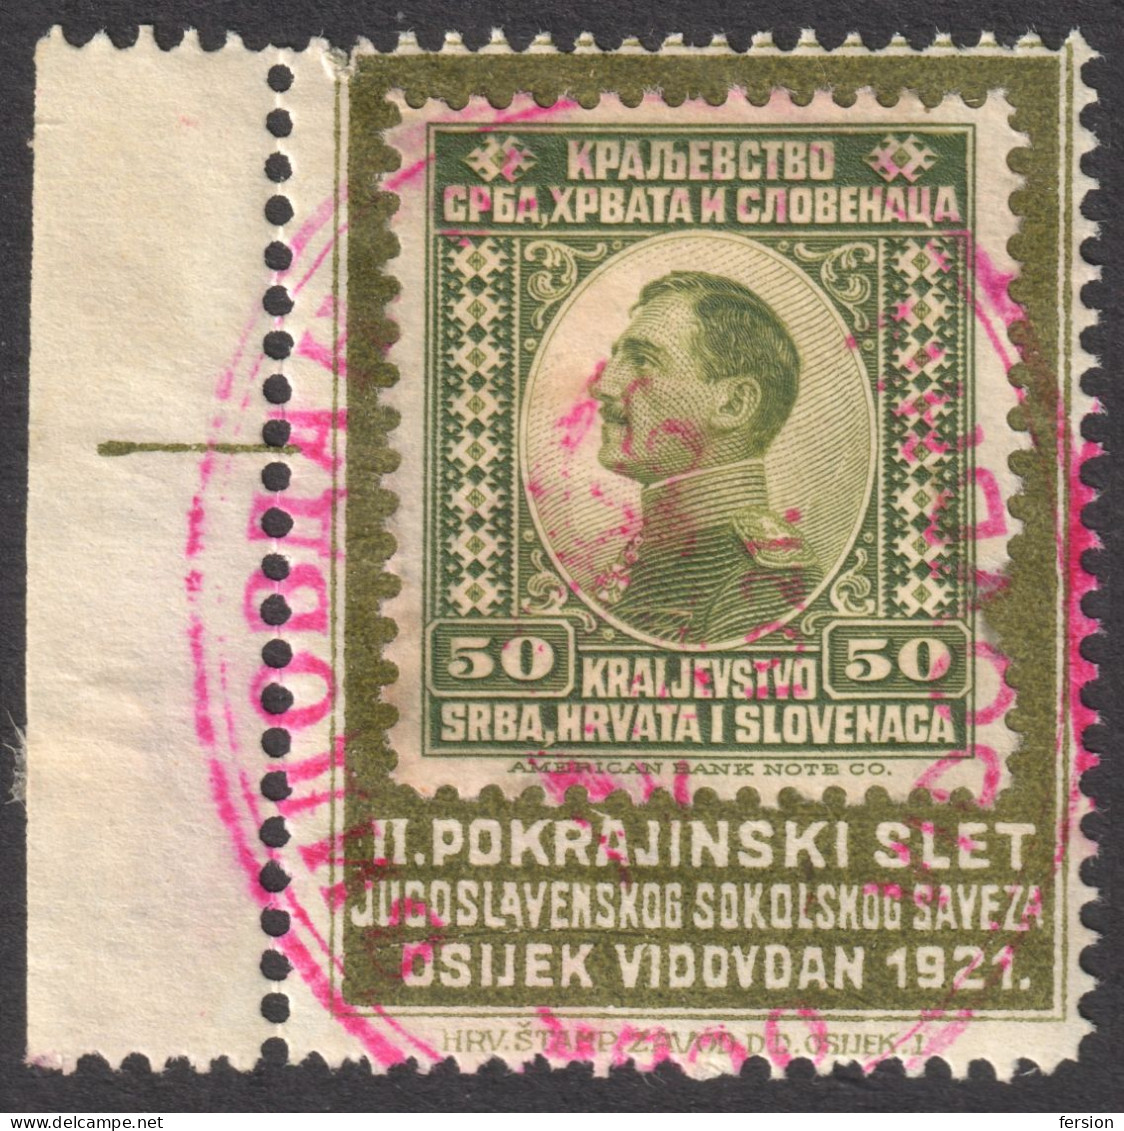 LATIN Letters - 1921 Croatia Yugoslavia SHS Sokolski Slet Scouts Scout Meeting OSIJEK FDC Cinderella Vignette Label - Gebraucht